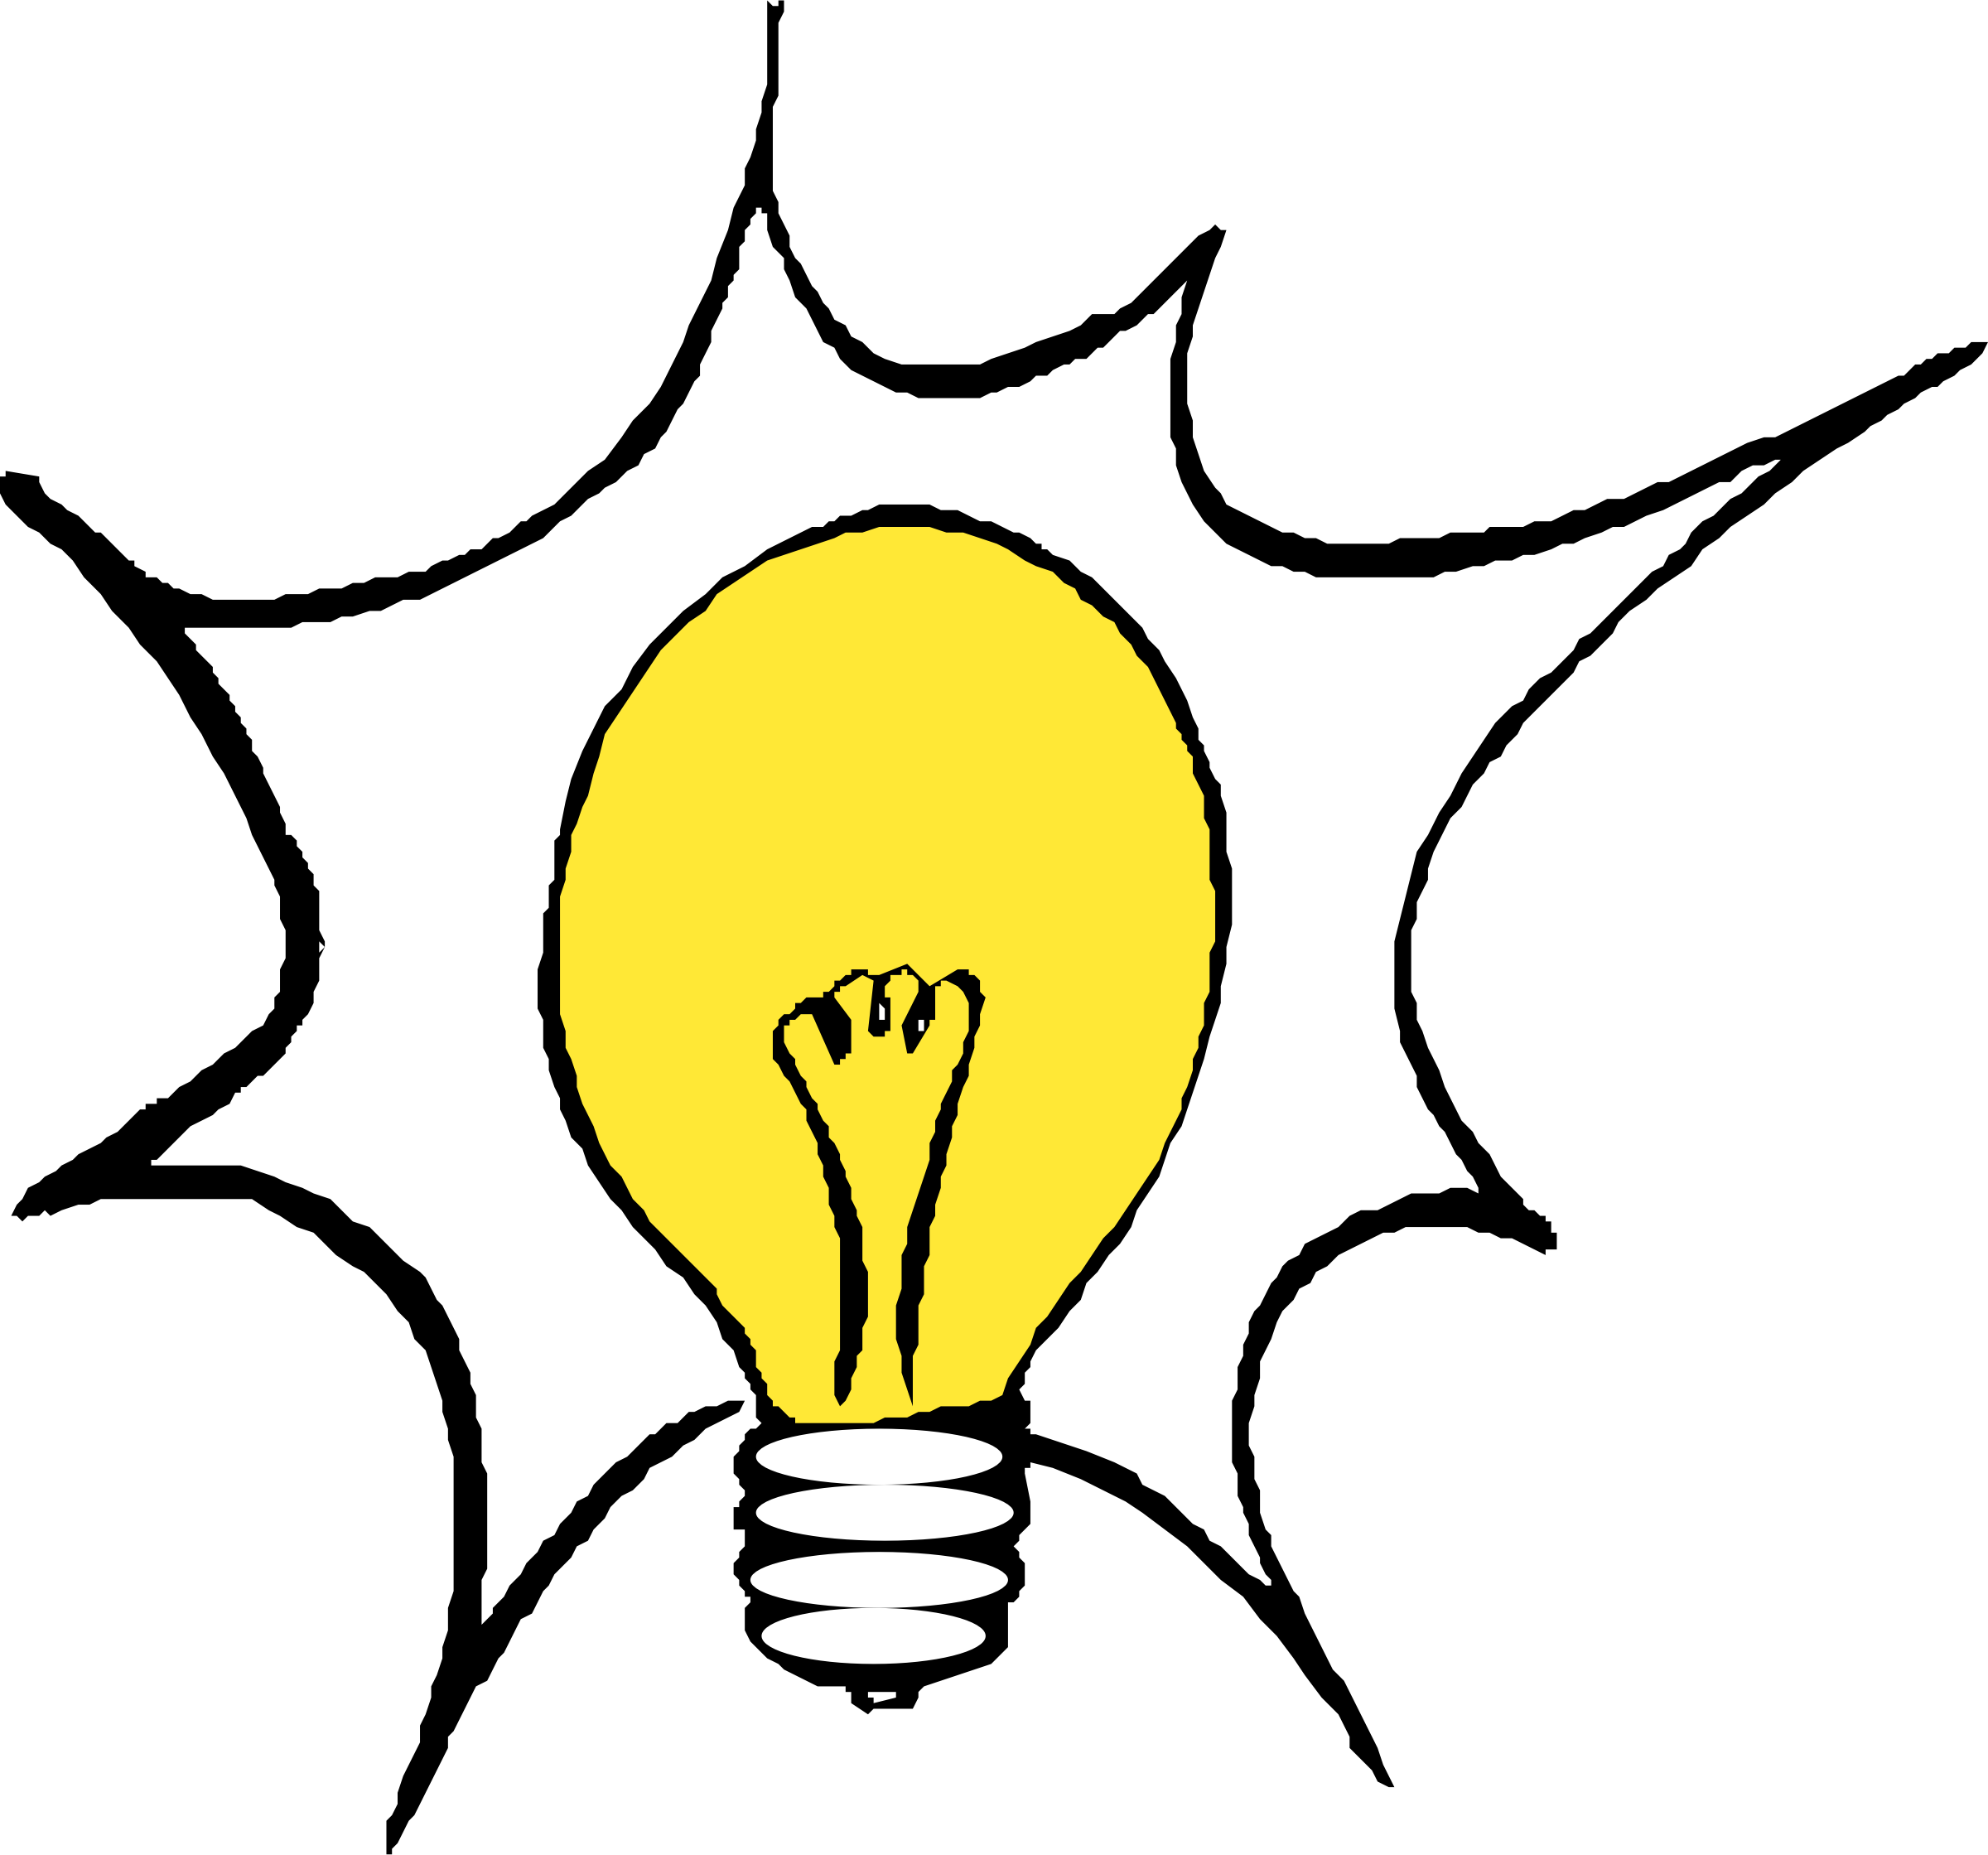 Lightbulb light bulb clip art at vector 2 image.